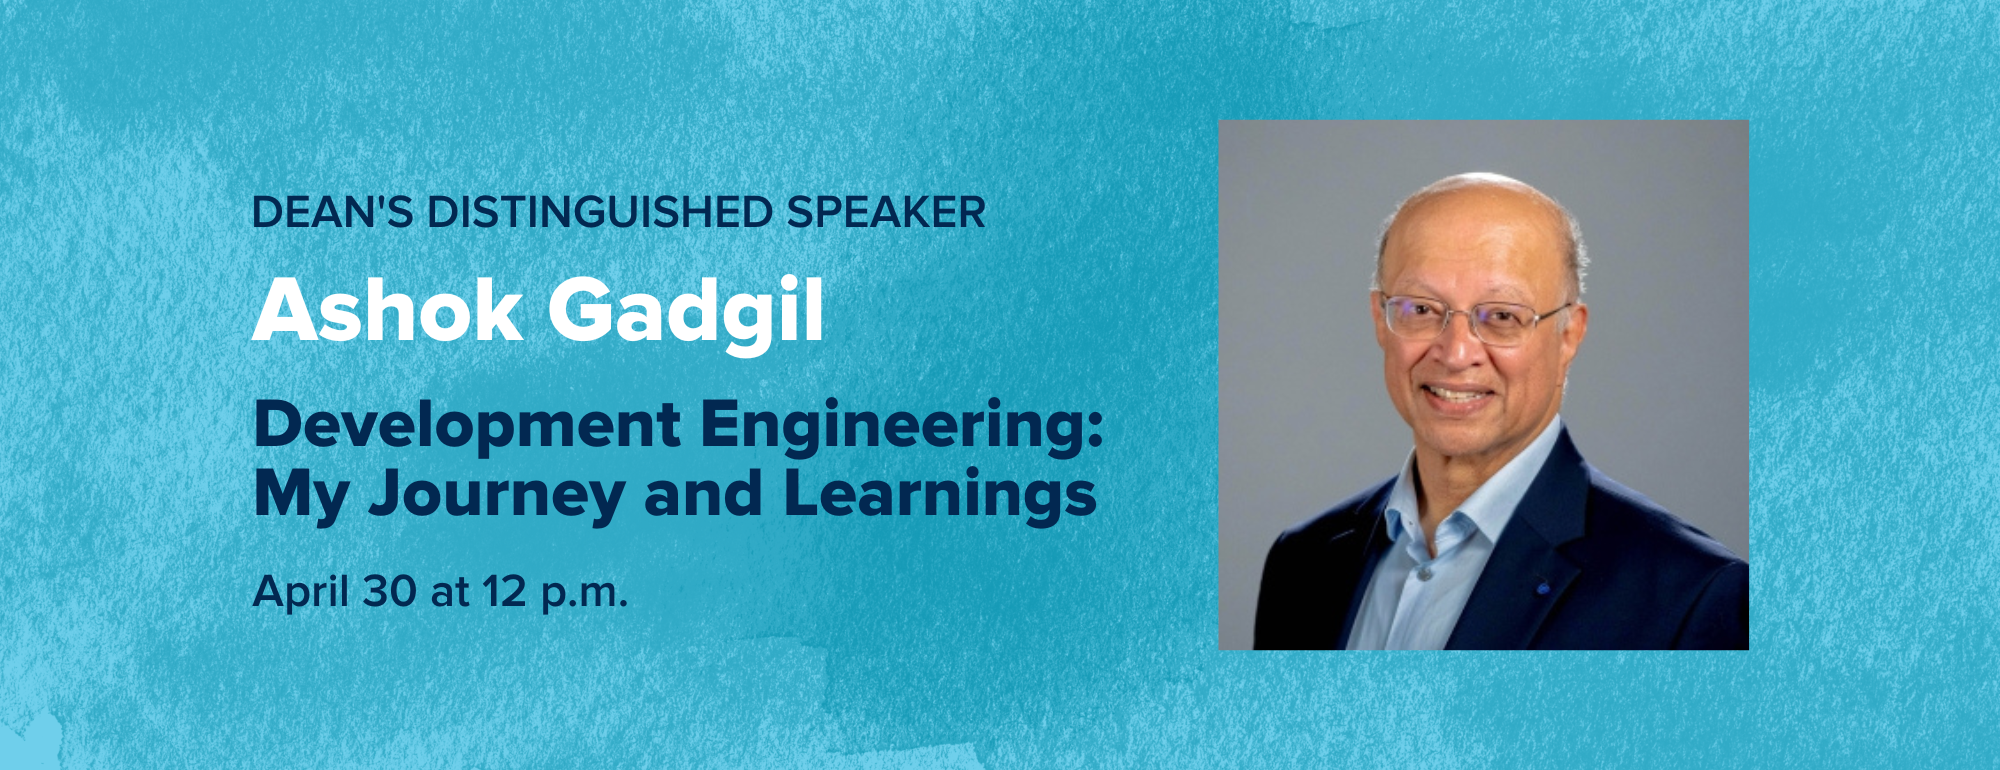 Dean's Distinguished Speaker Ashok Gadgil: Development Engineering: My Journey and Learnings